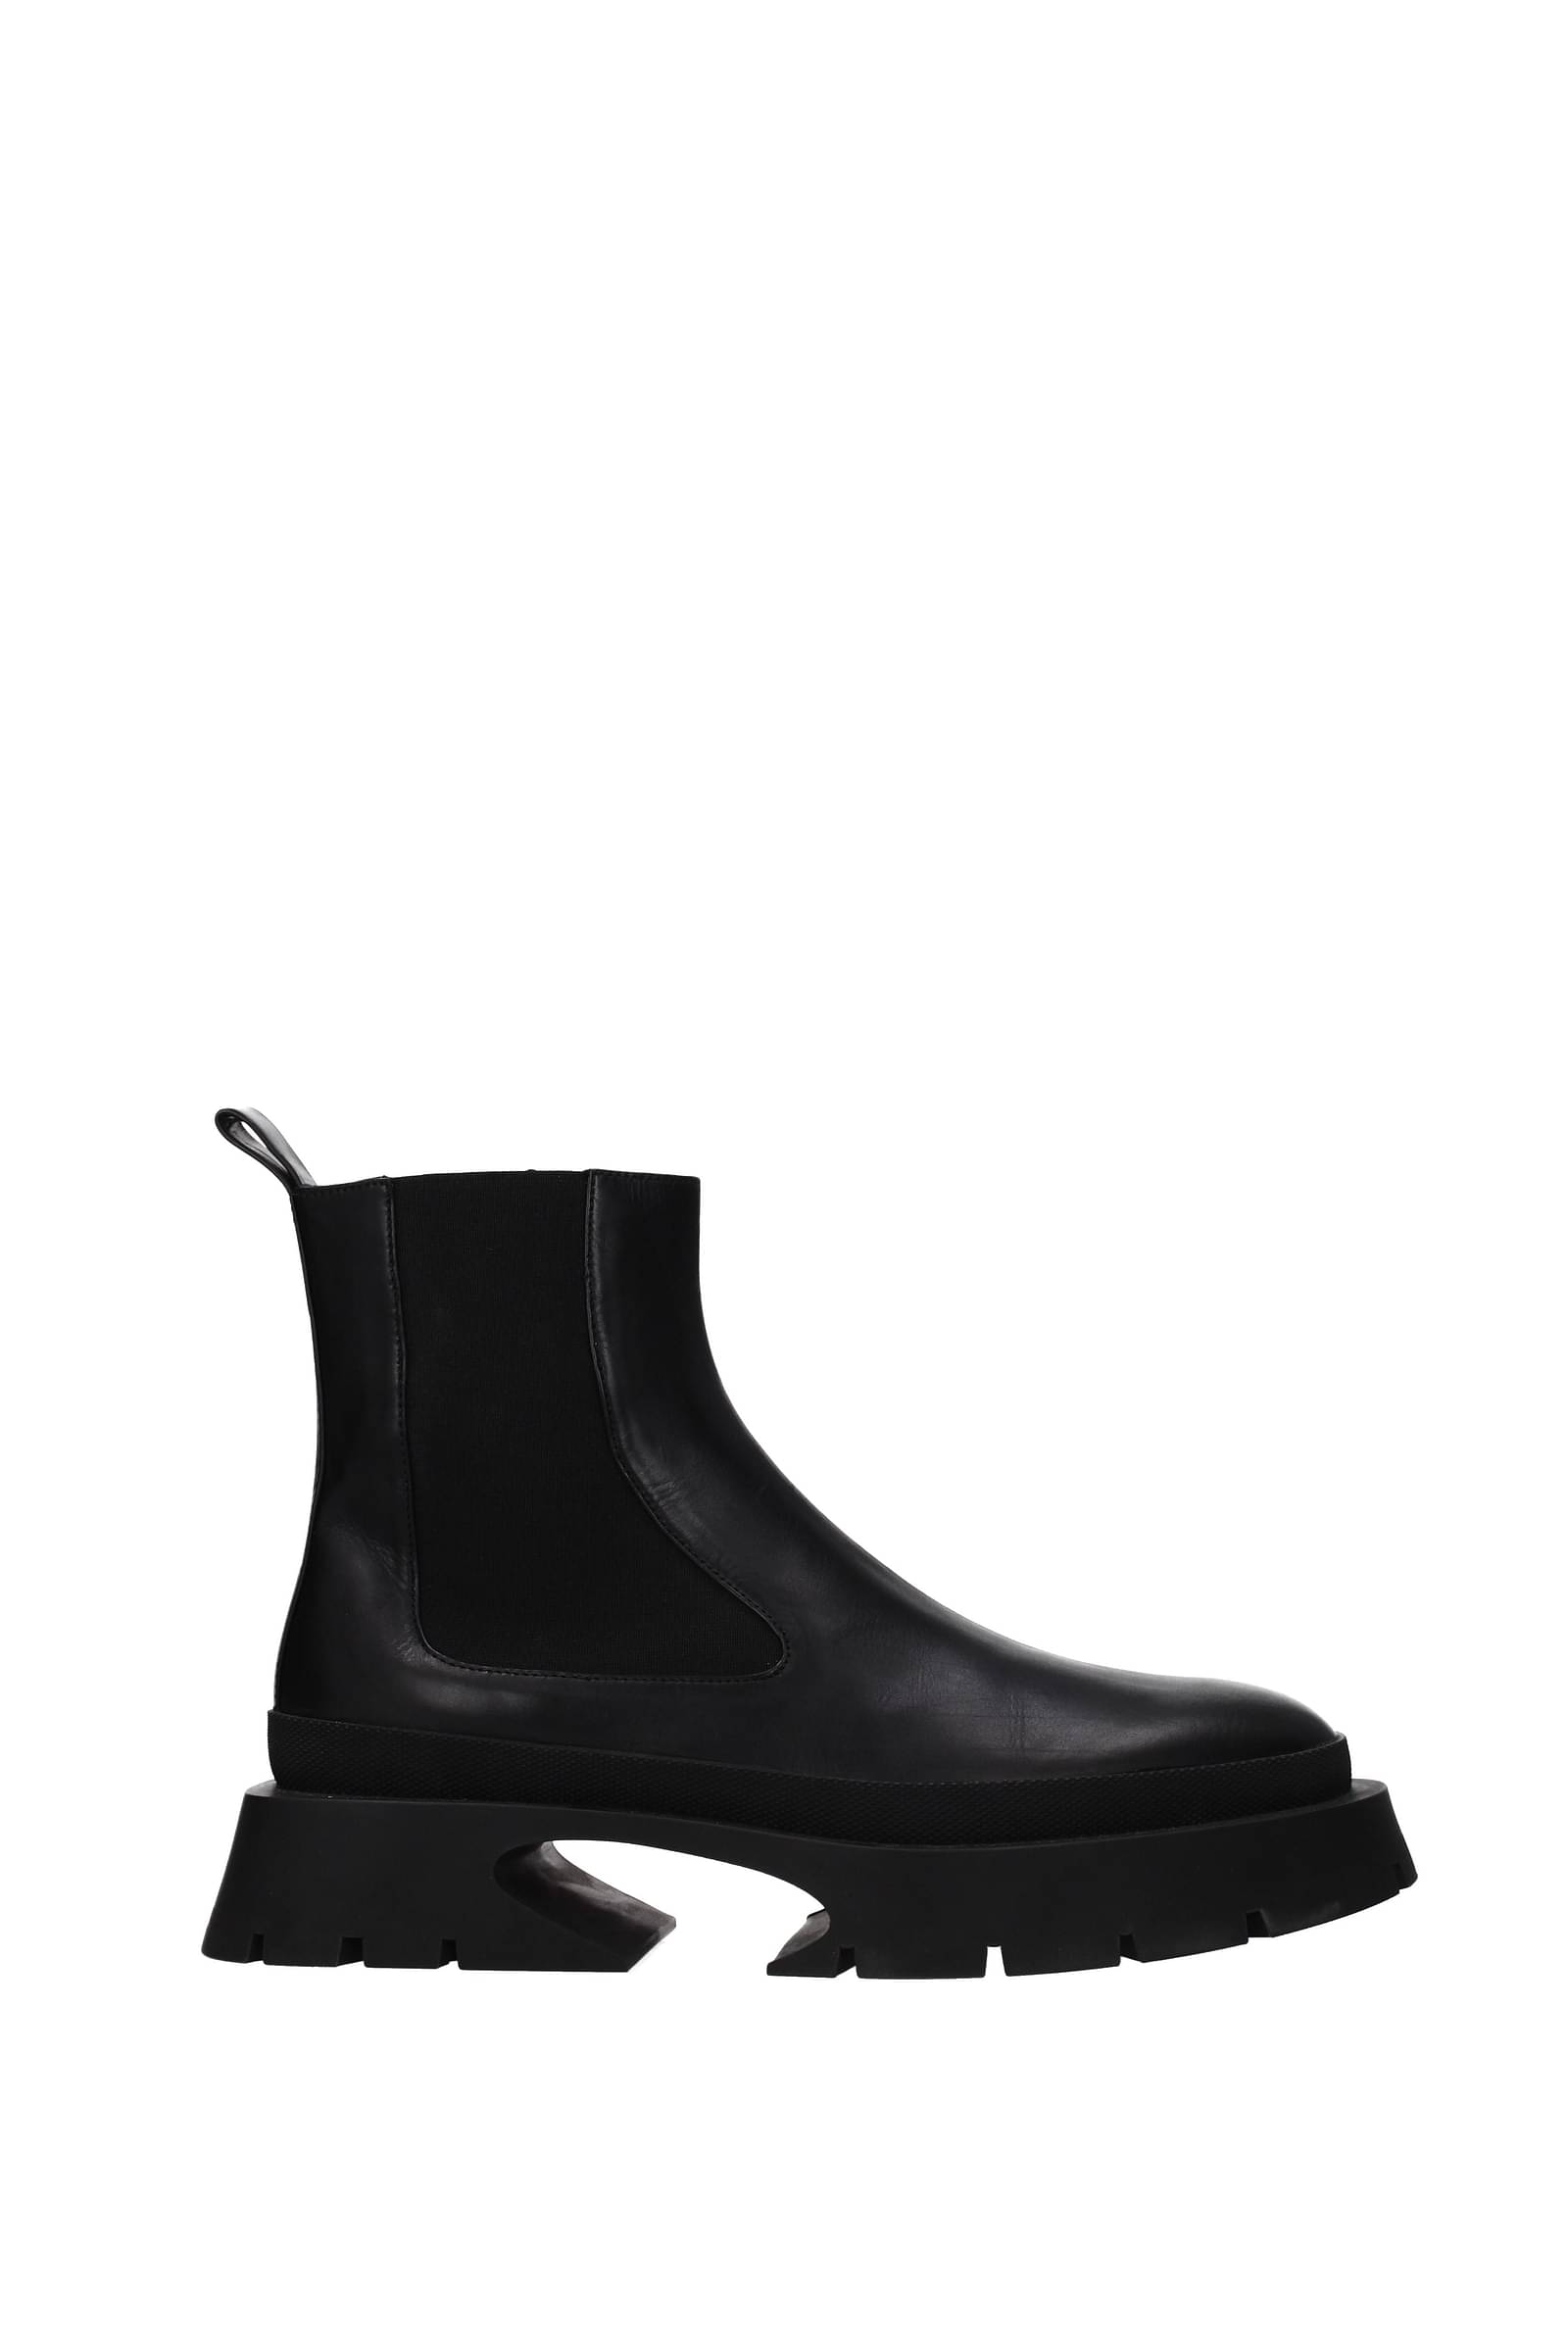 Jil Sander Ankle boots Women JS37061A015TAC999 Leather 393,58€